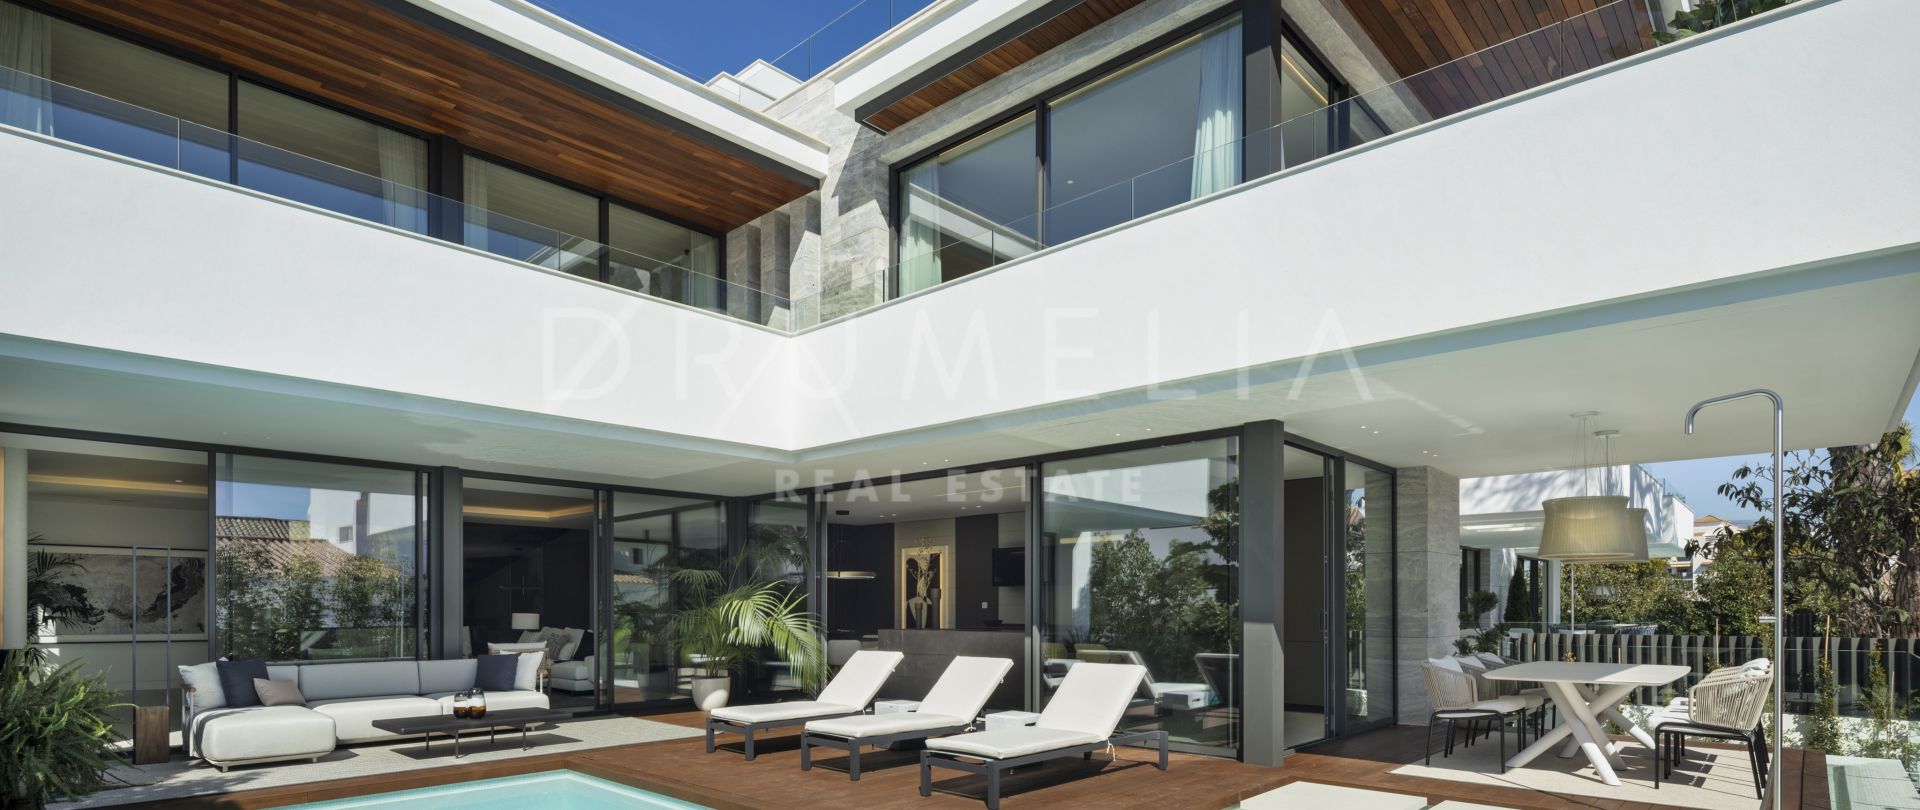 Luksuriøs, nybygd strandvilla med moderne arkitektur i San Pedro, Marbella.